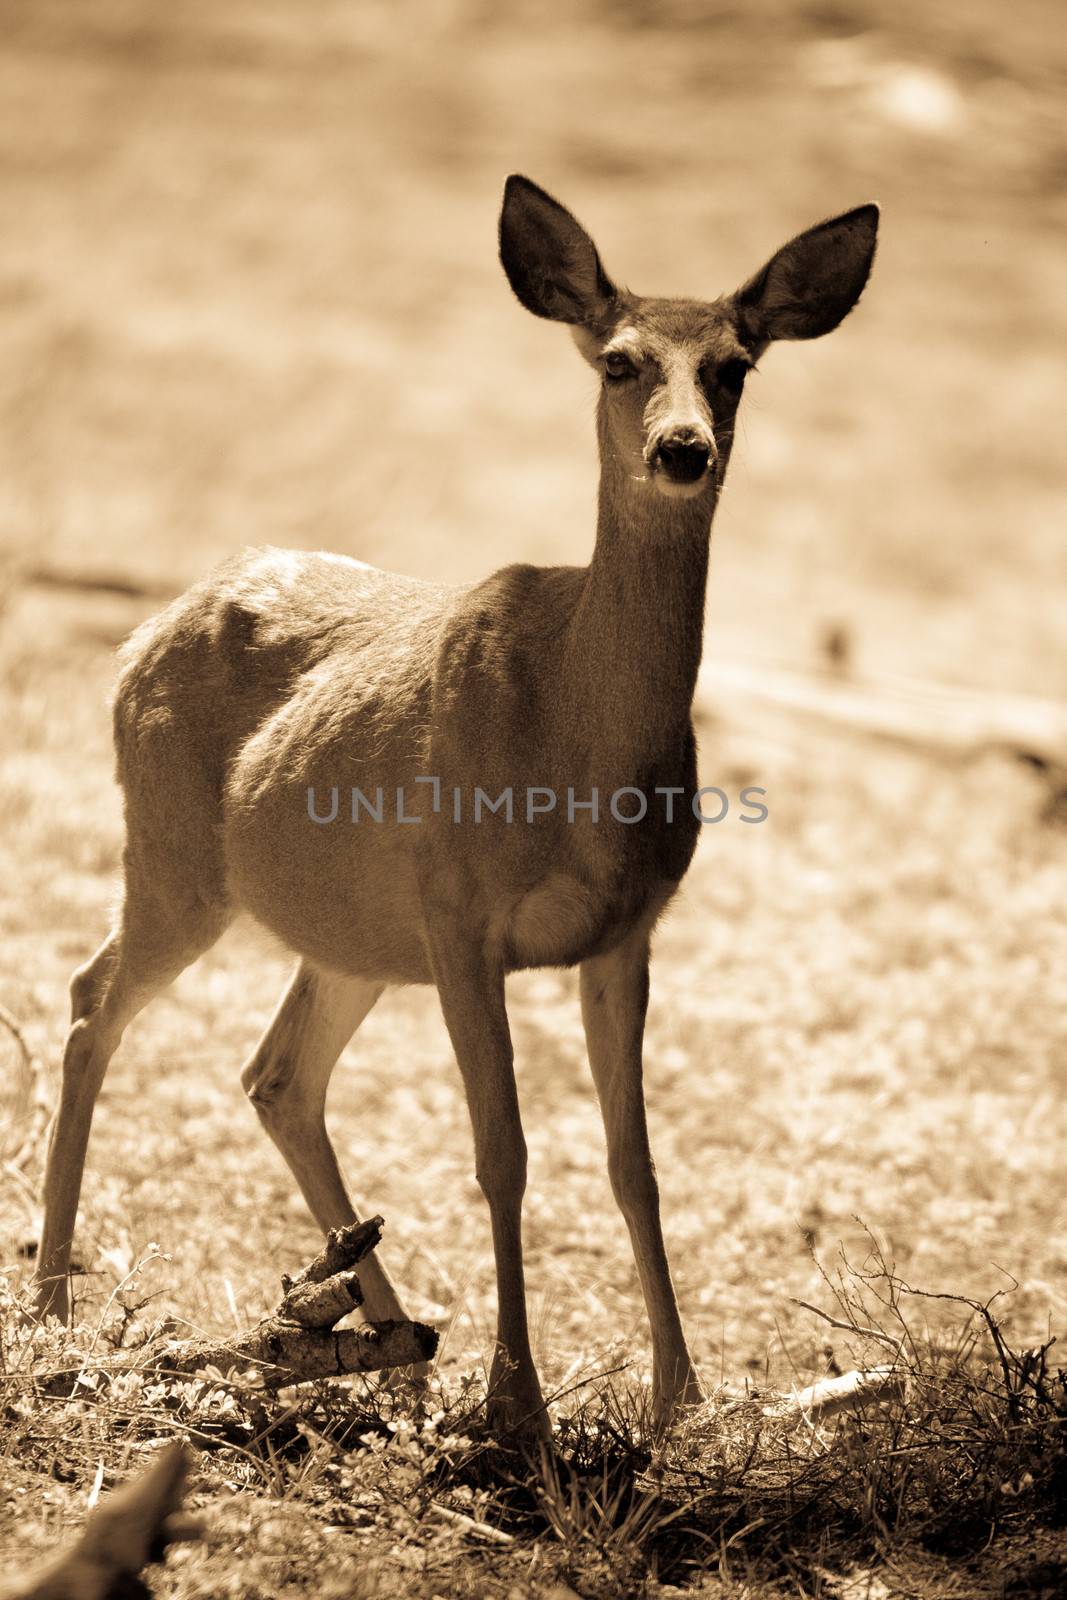 Black-tailed deer in Yosemite National Park by CelsoDiniz